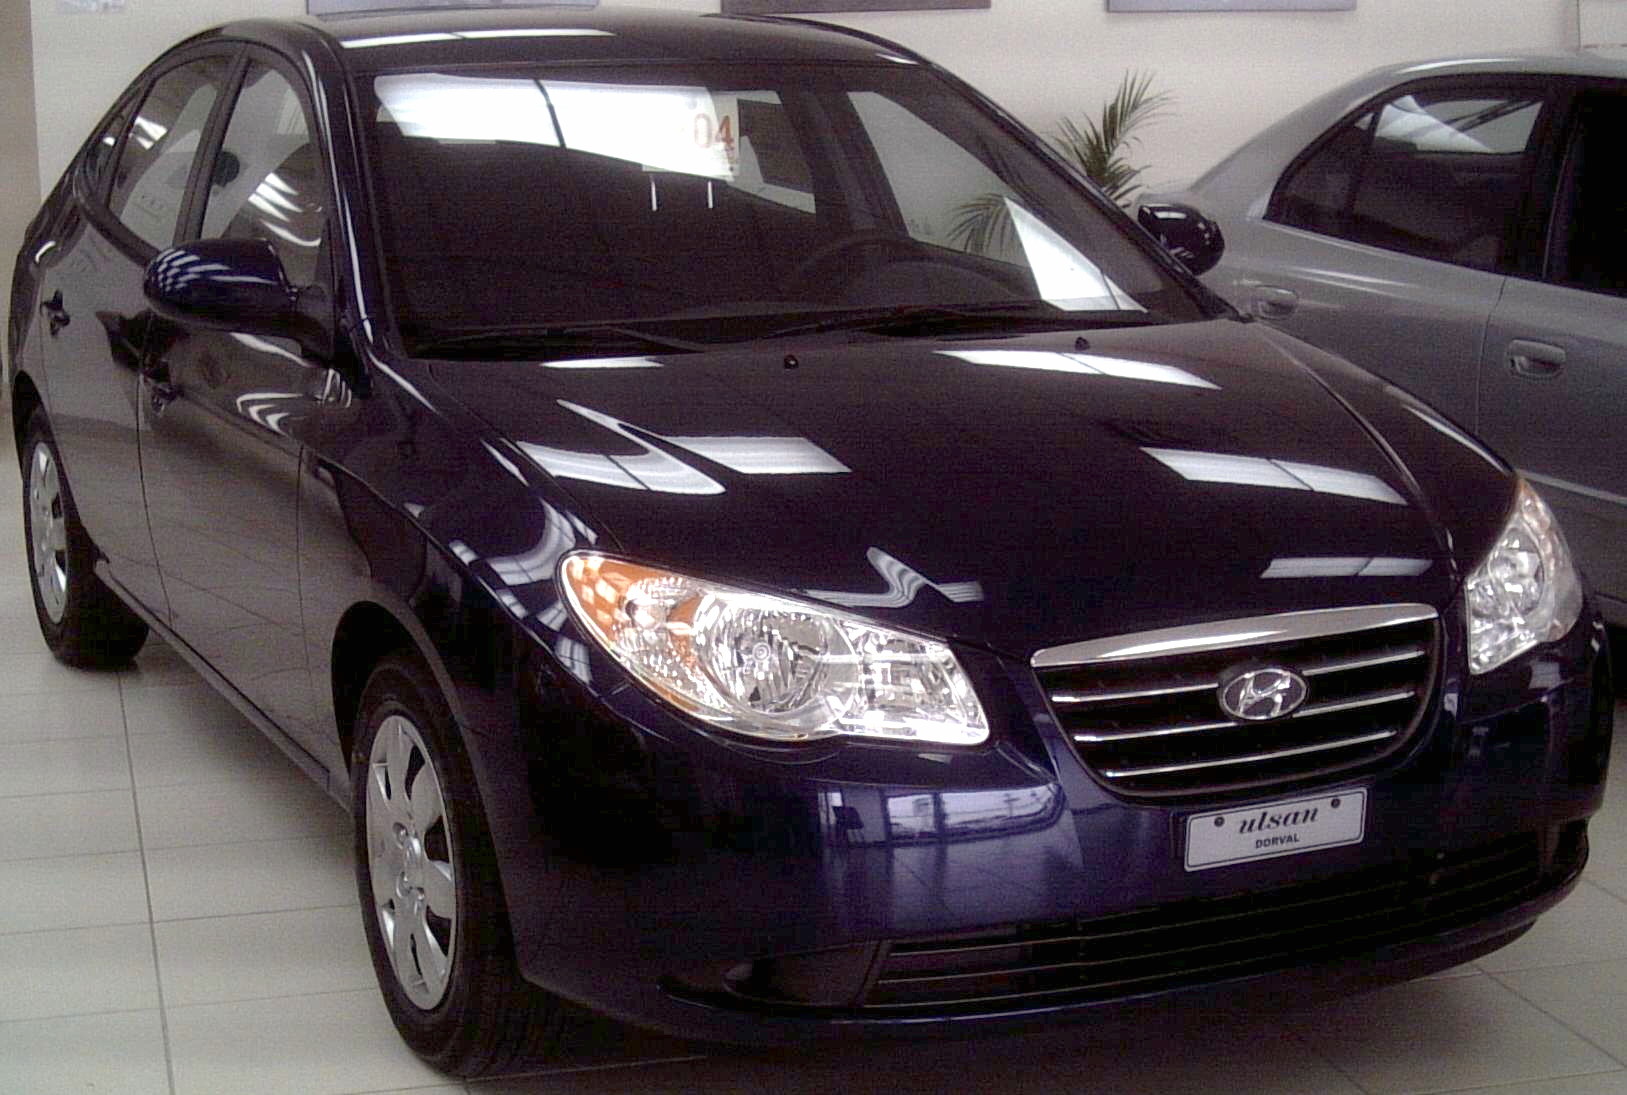 File:2007 Hyundai Elantra.JPG - Wikimedia Commons